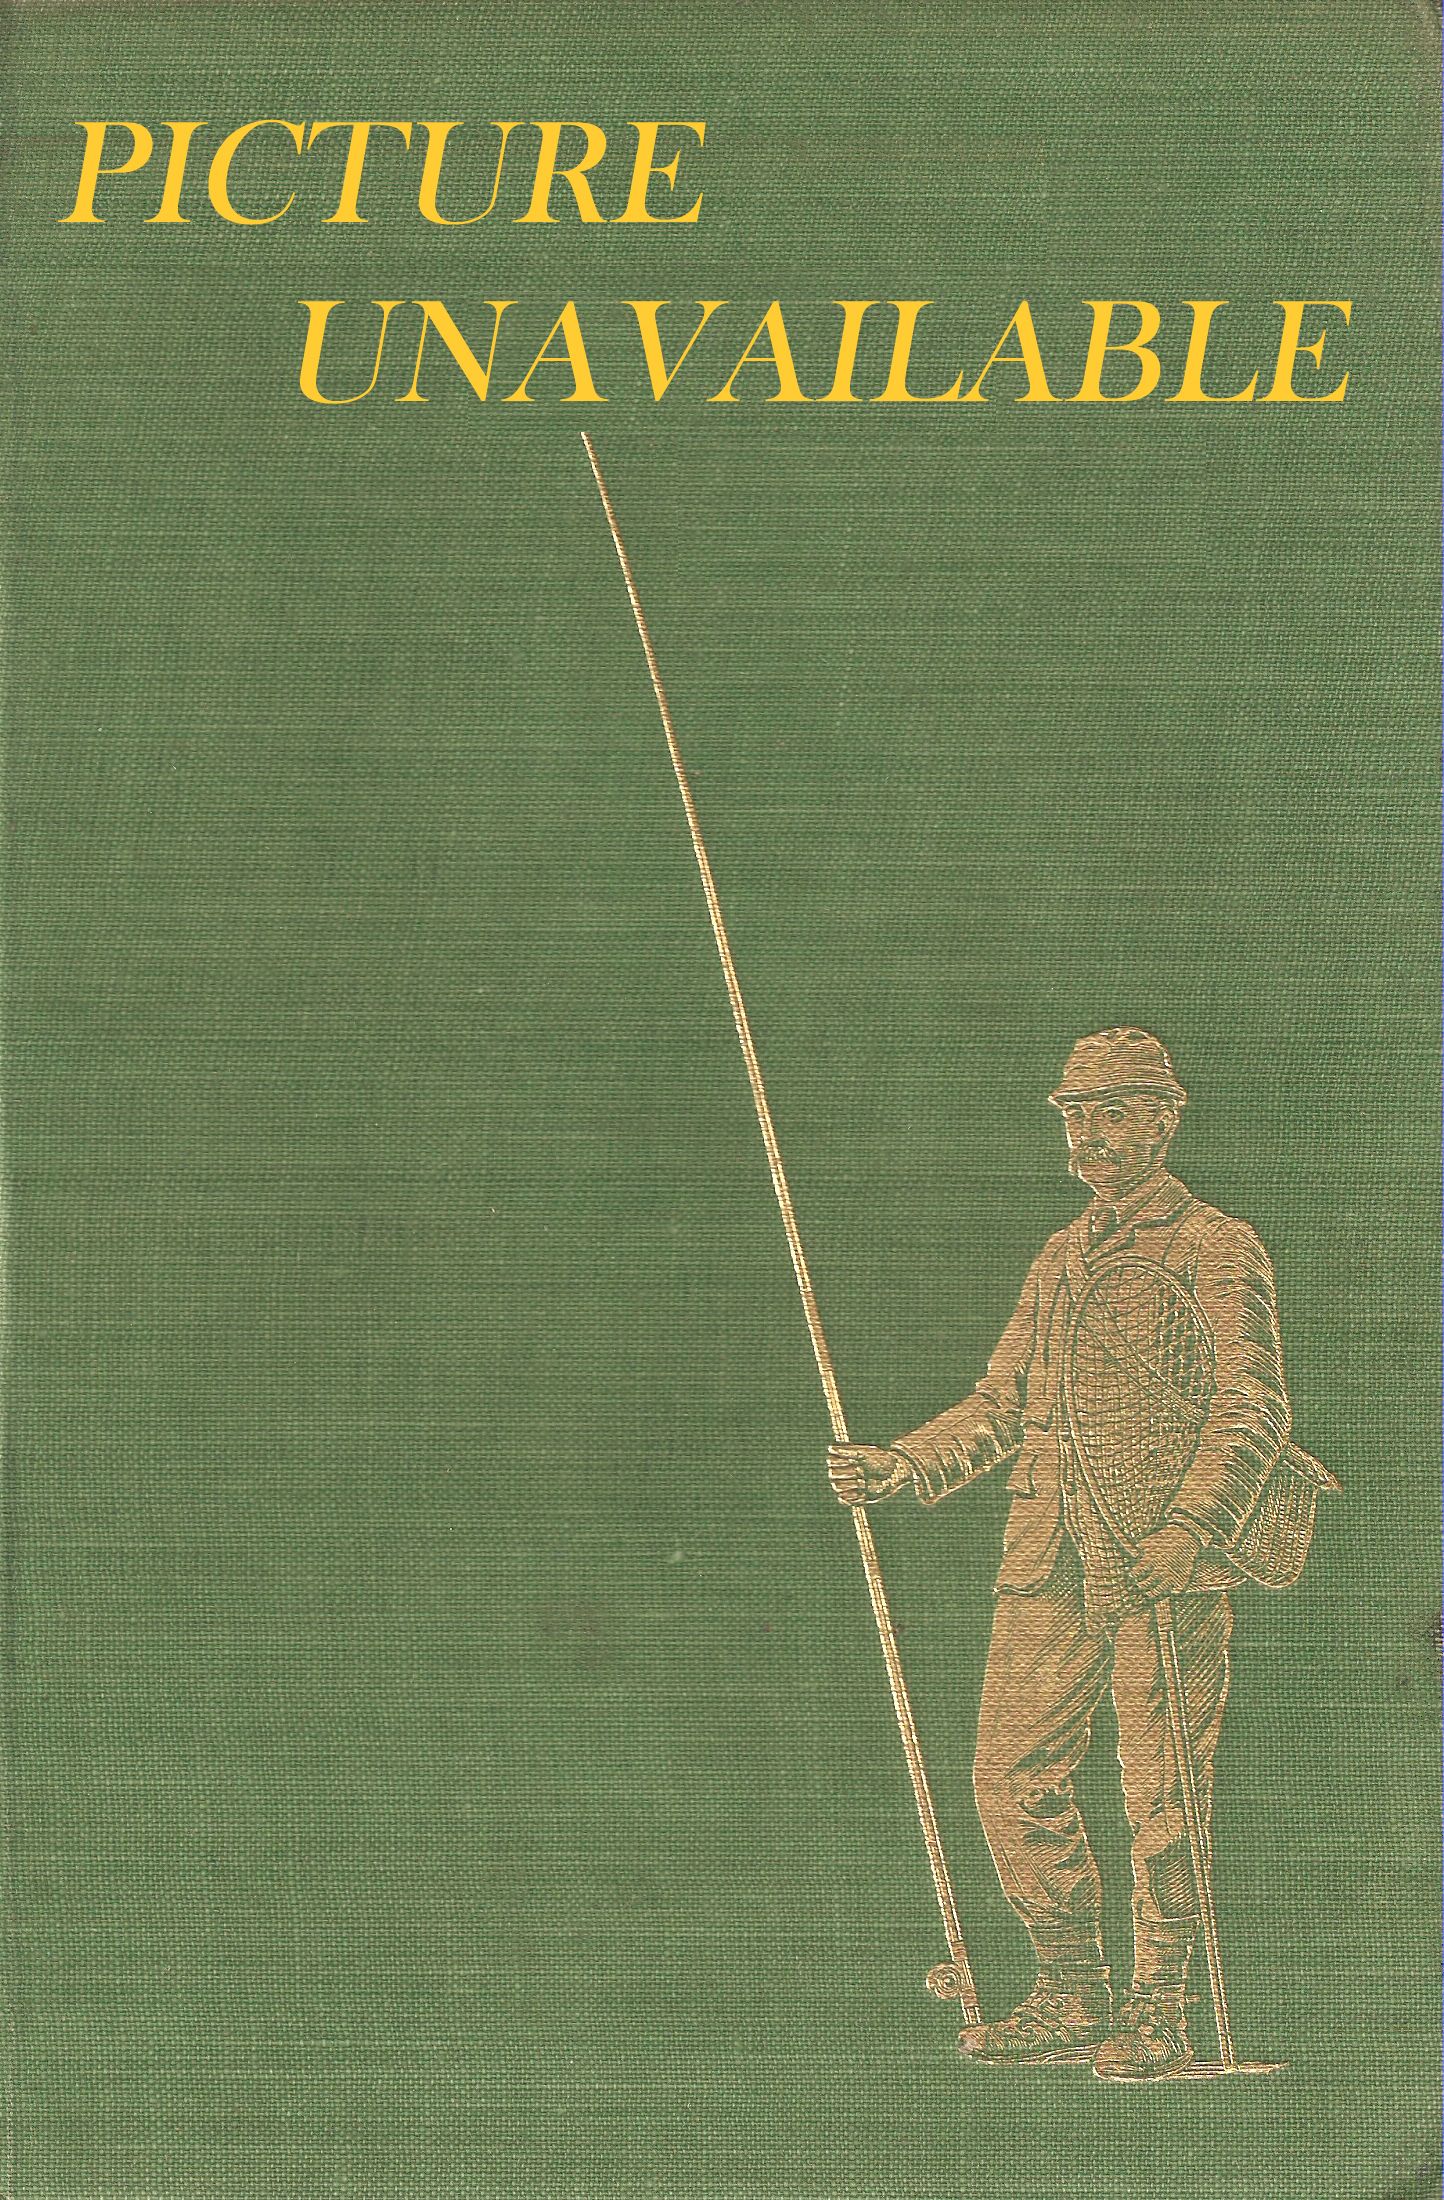 THE CLIMBER'S HANDBOOK. By Garth Hattingh. Second edition.